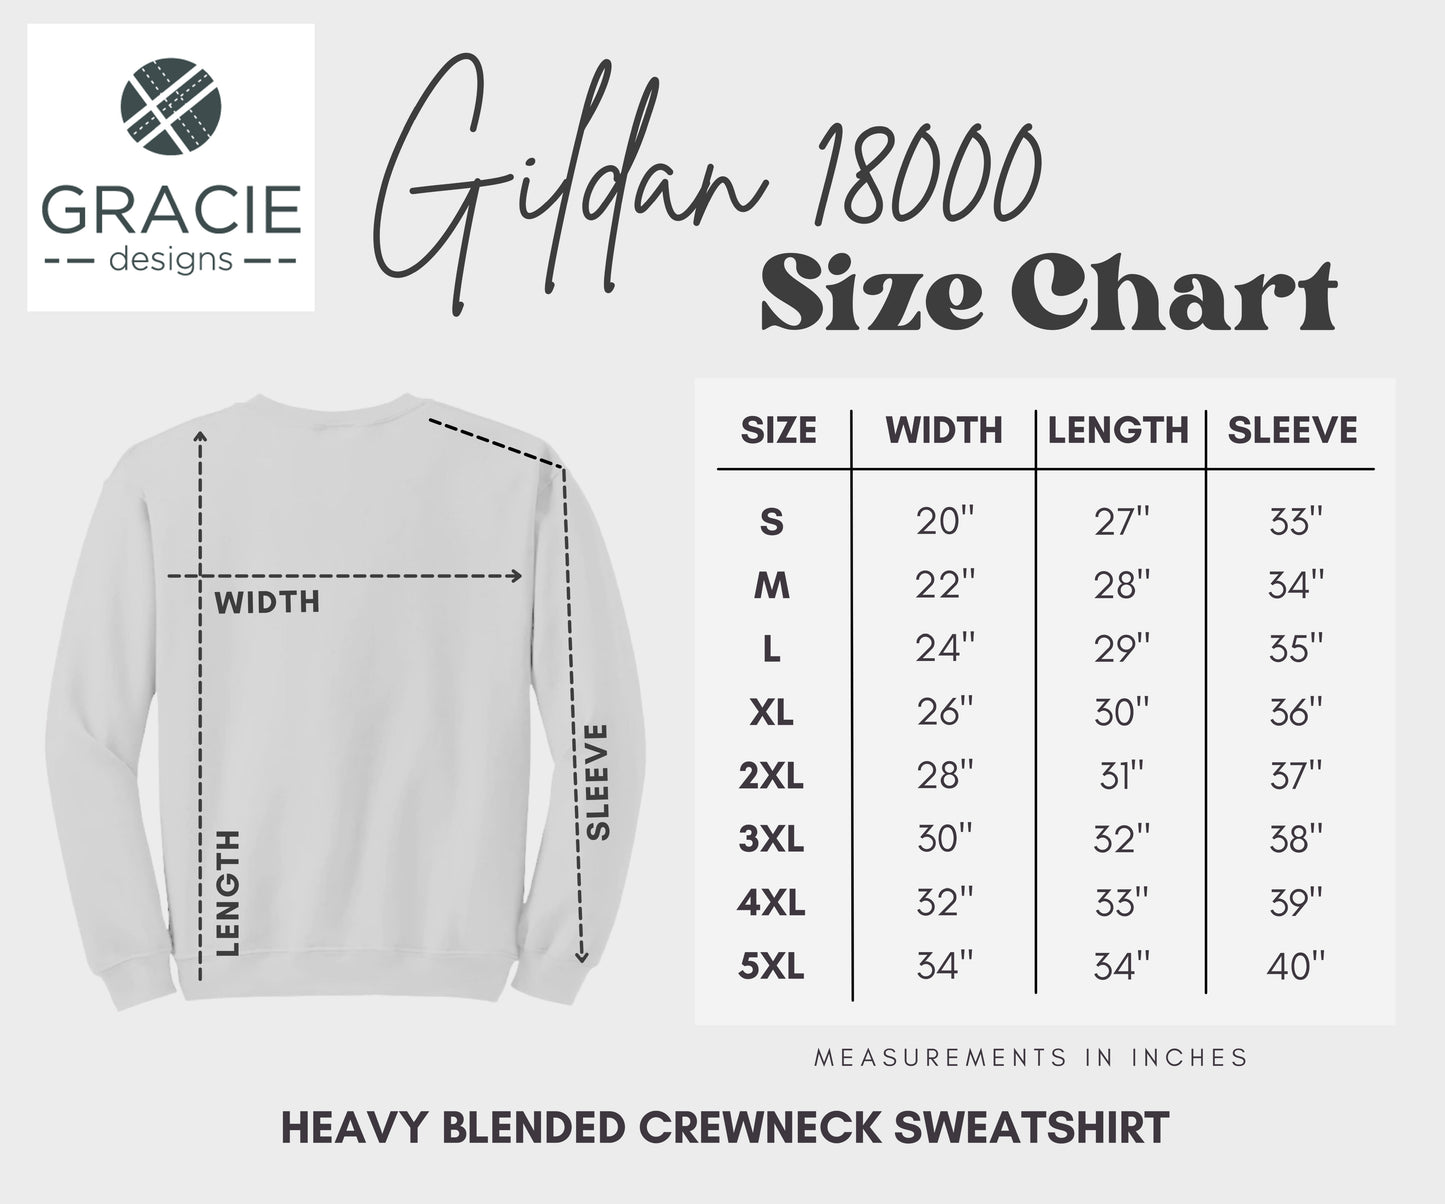 Sand Beige Custom Embroidered Crewneck Sweatshirt - Personalized Chain Stitch